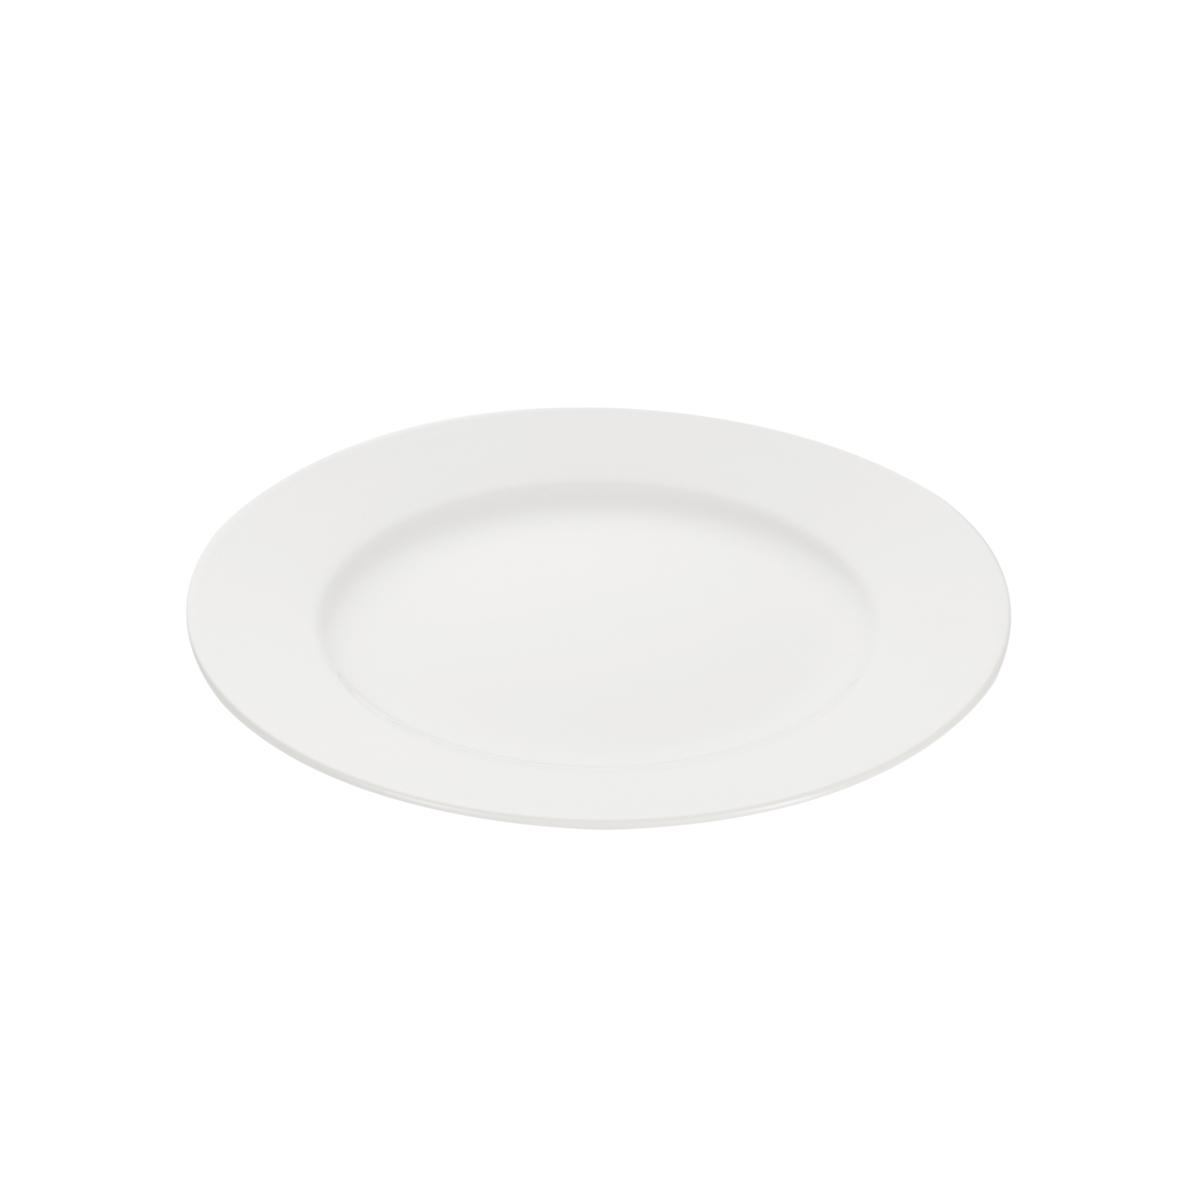 Плоская тарелка Gipfel Classique 50906 27 см плоская тарелка gipfel classique 50905 25 см